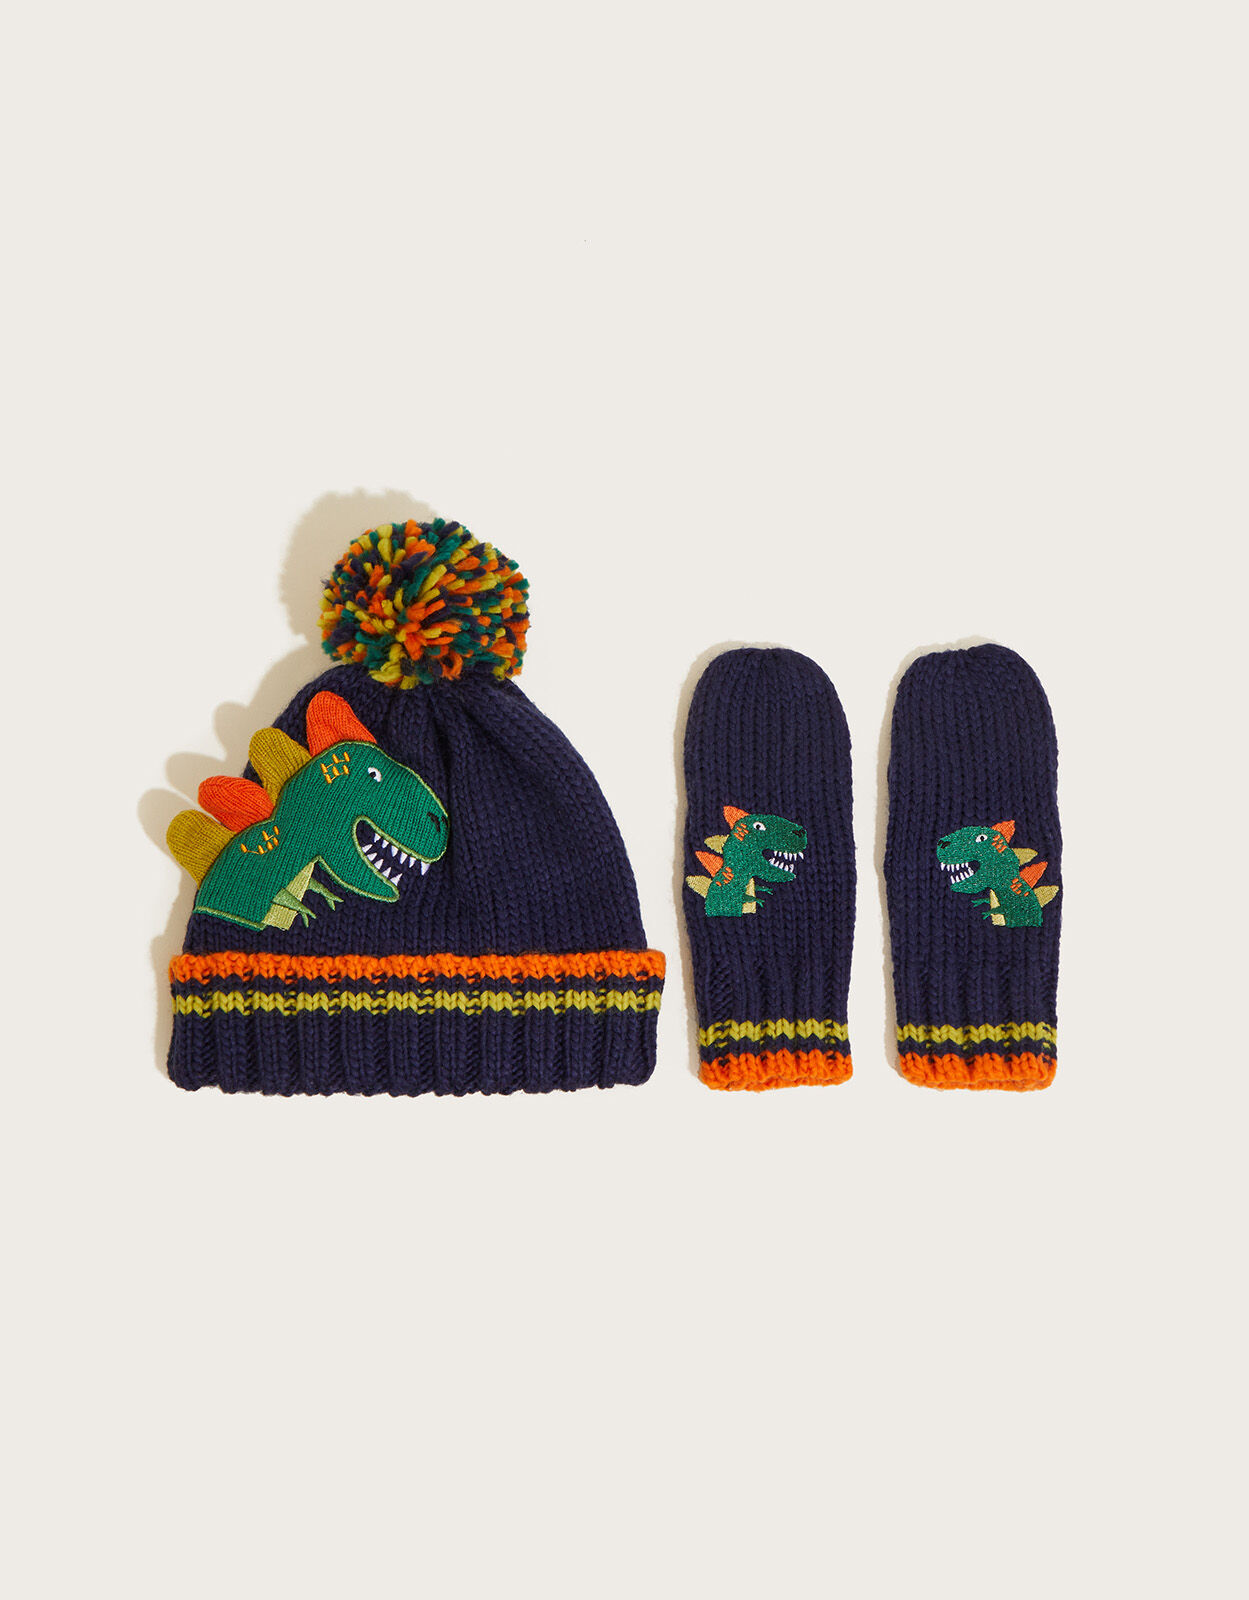 Winter Warm Knit Cap for Little Kids DANMY Boys Beanie Hat,Fleece Lined Hat Scarves Gloves for Toddler Boy Girls Children 